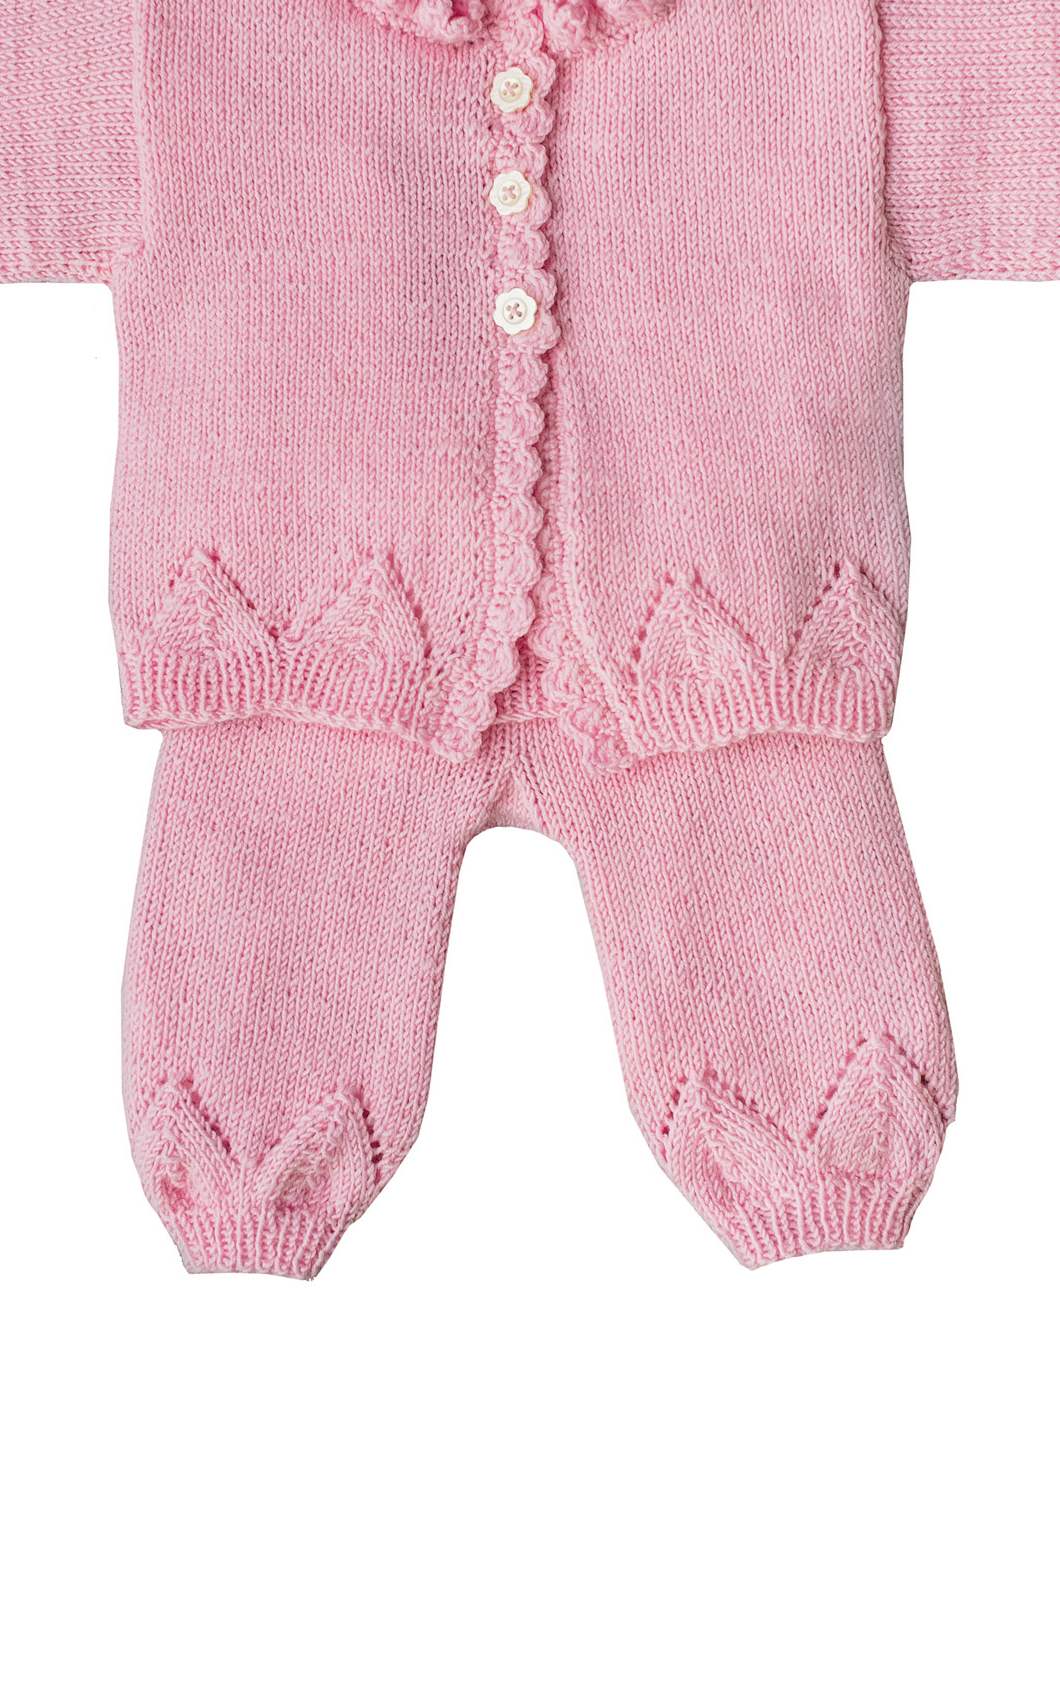 LANA GROSSA Strickset Baby Hose mit Ajourmuster - Strickset